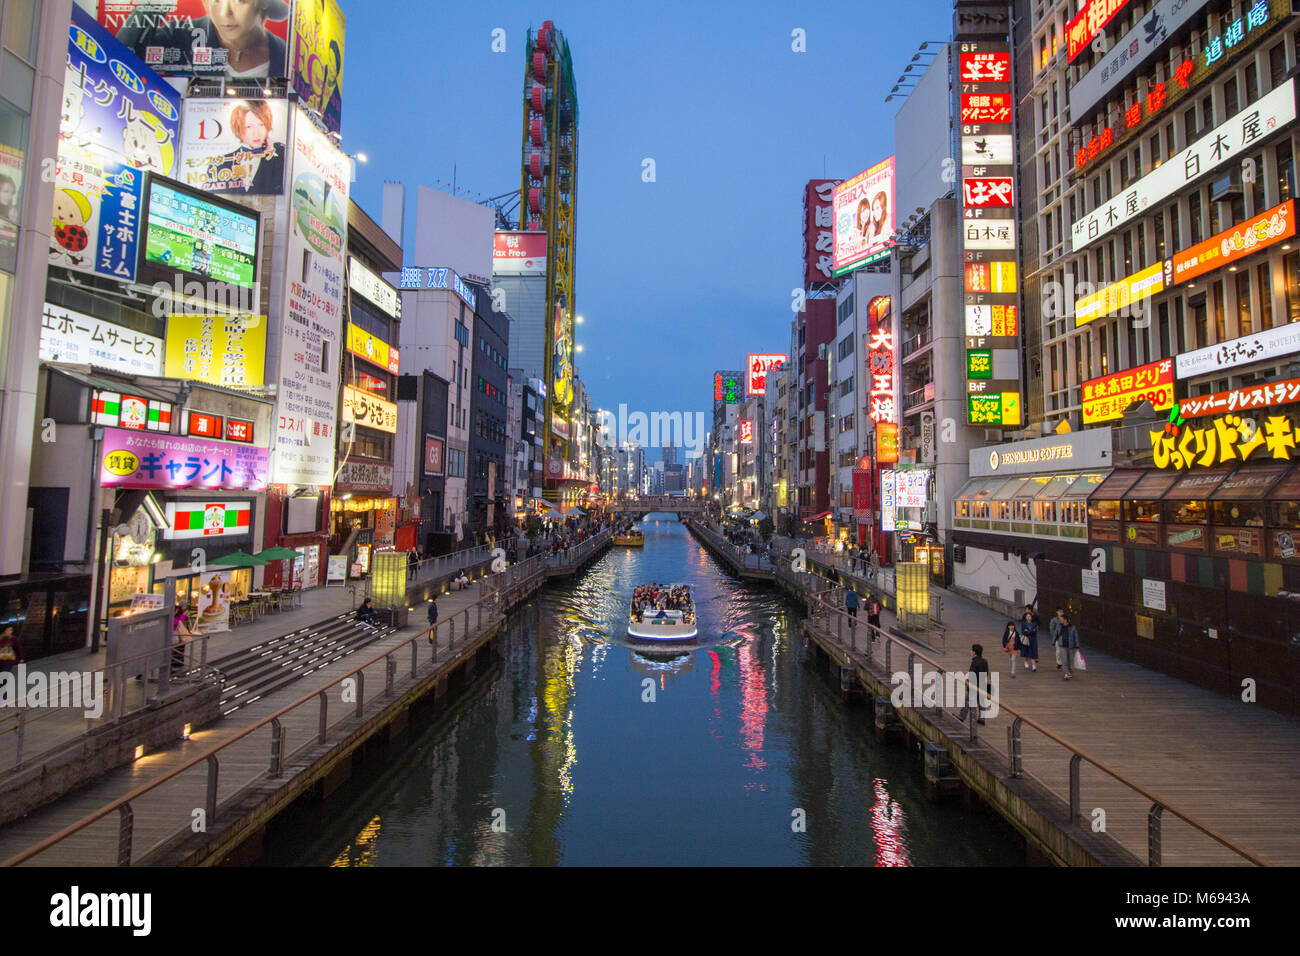 Early evening nightlife in the busy area around Dotonbori, Osaka, Japan Stock Photo